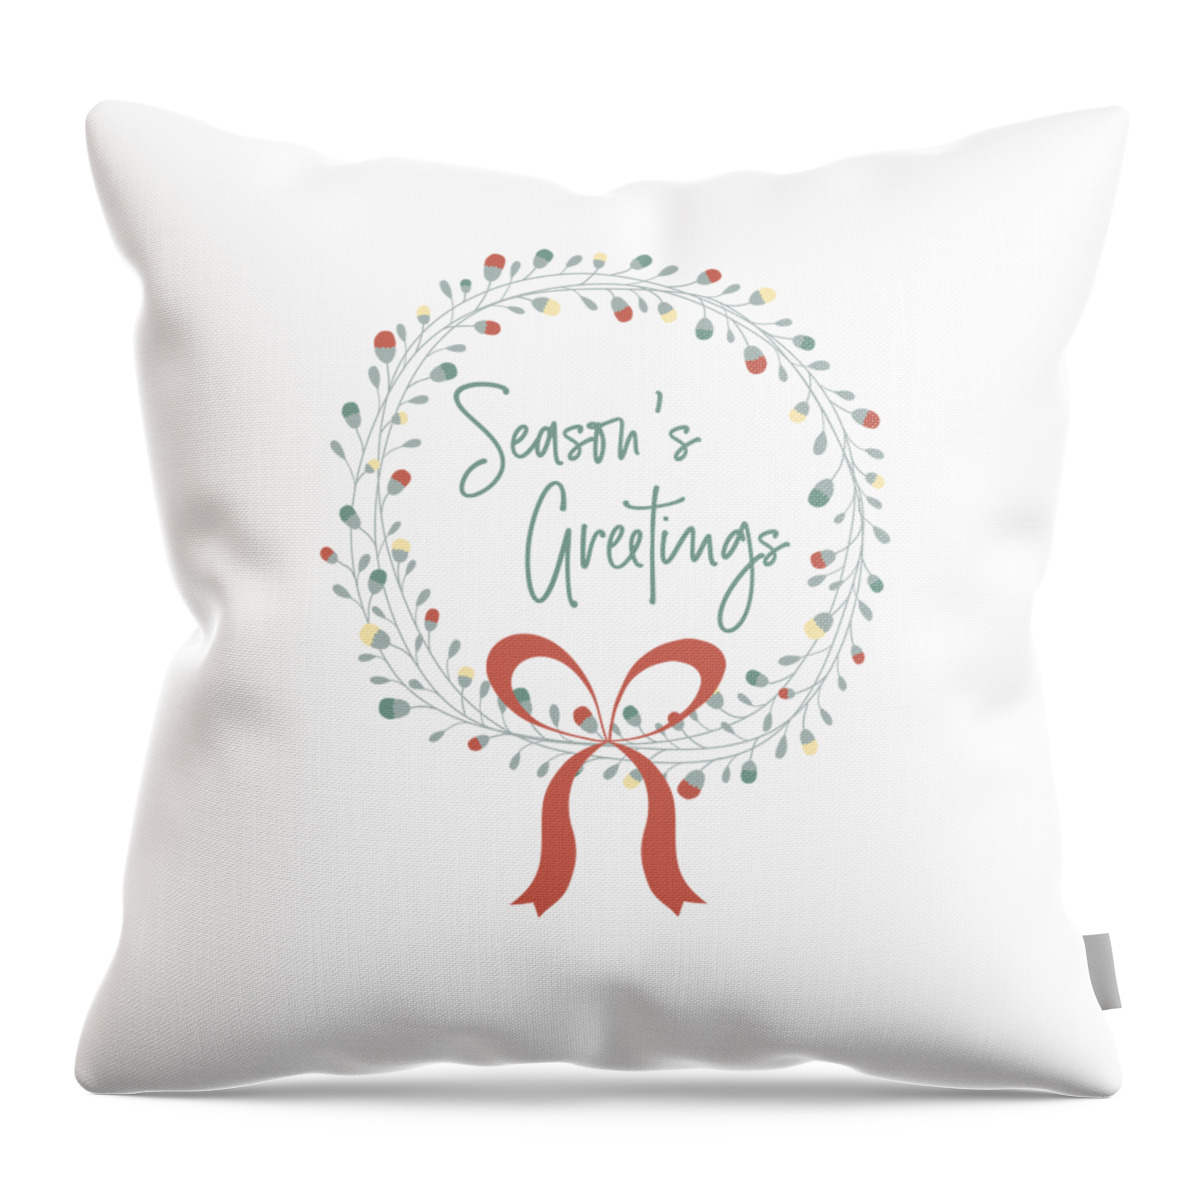 Minimal Throw Pillow featuring the digital art Boho Season's Greetings Wreath by Ink Well